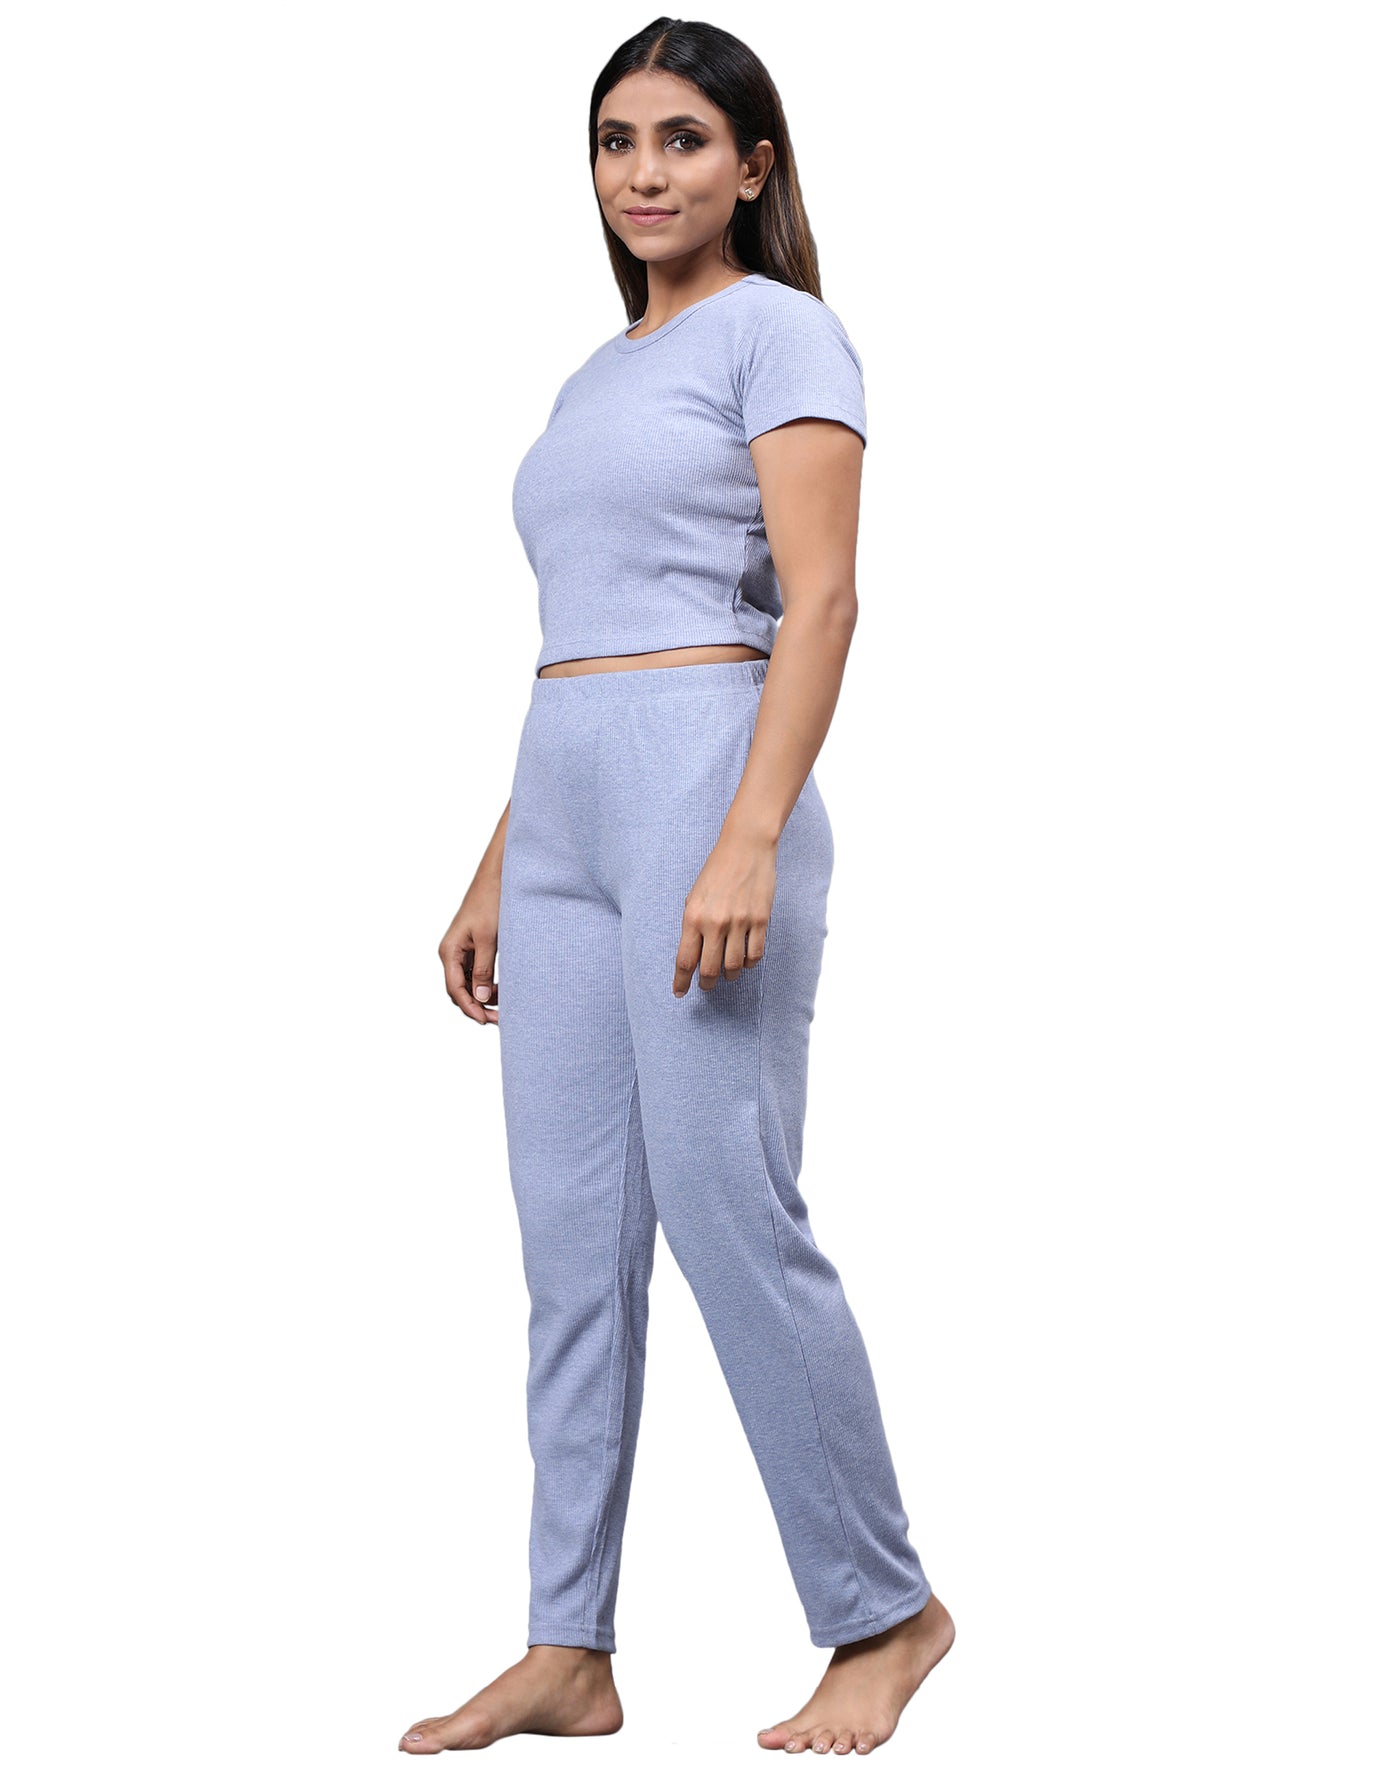 Pyjama Set for Women-Blue Solid